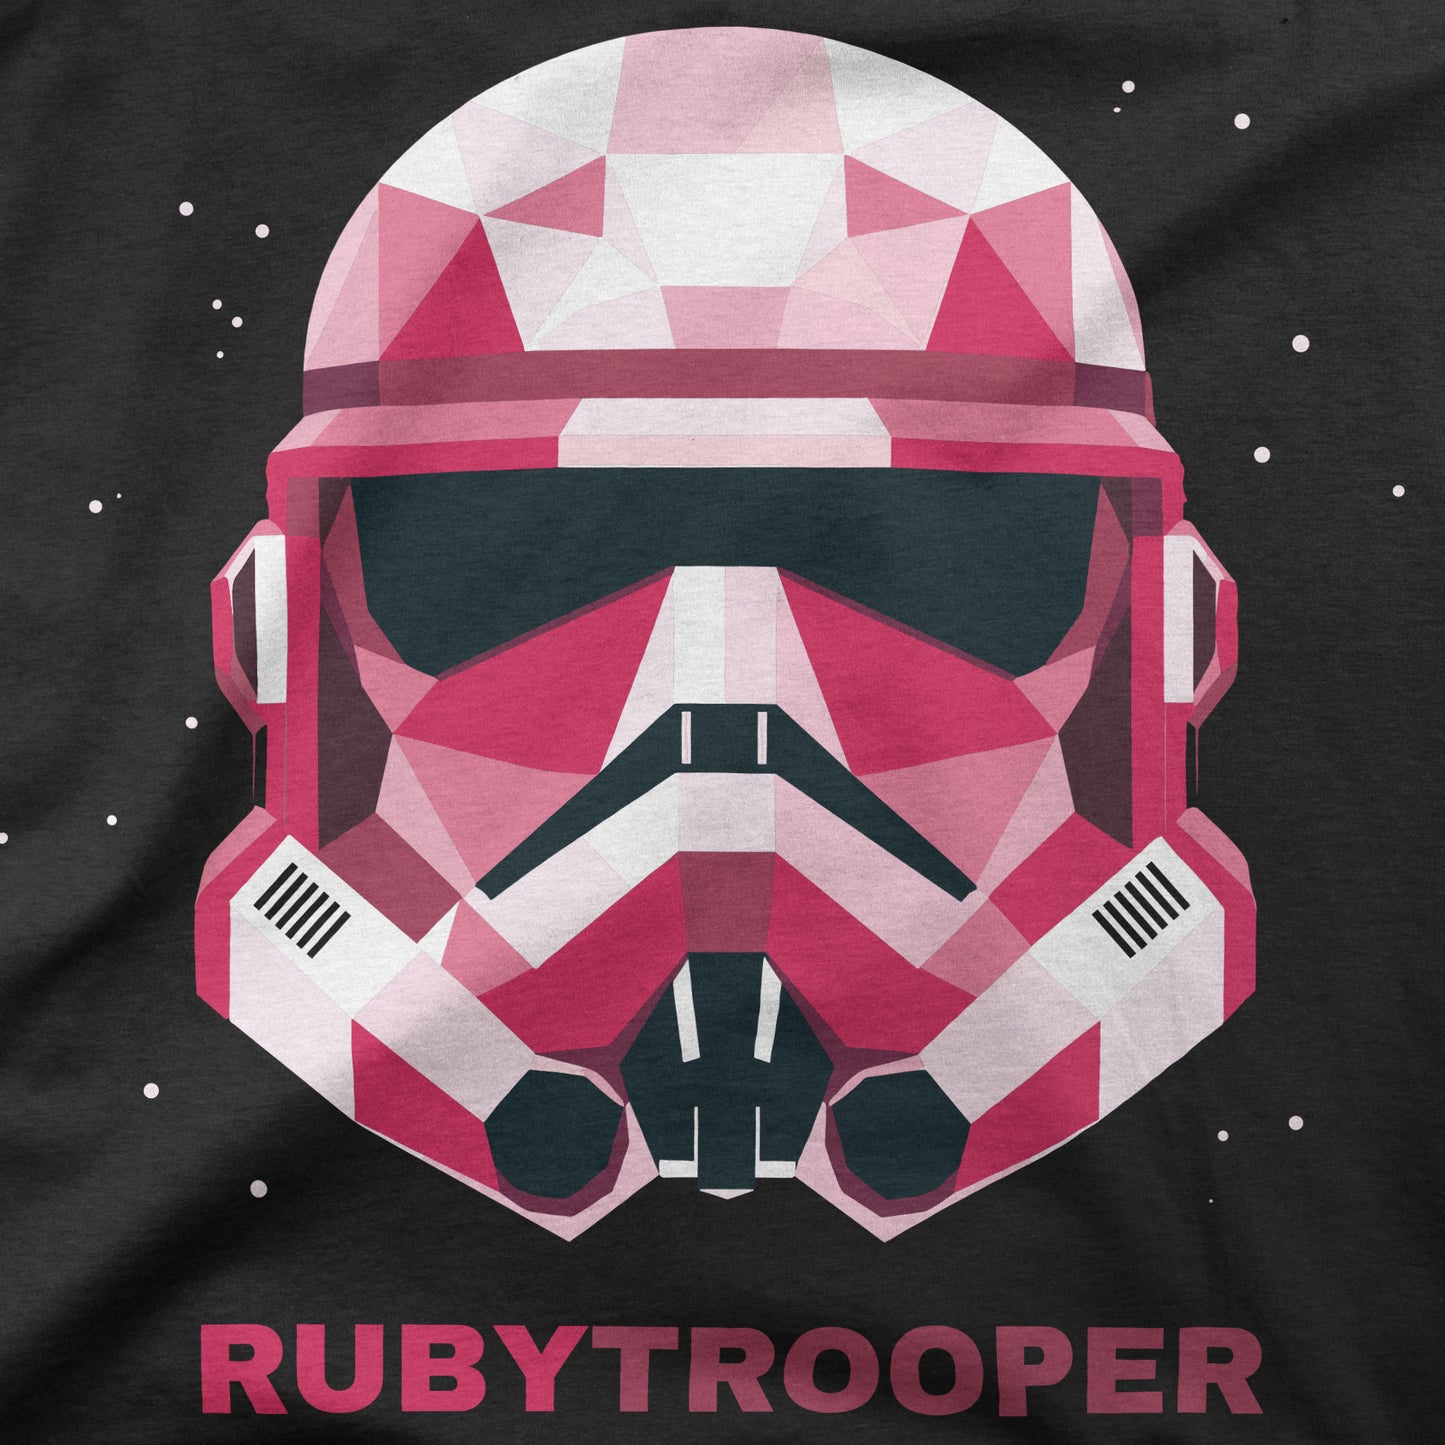 Rubytrooper